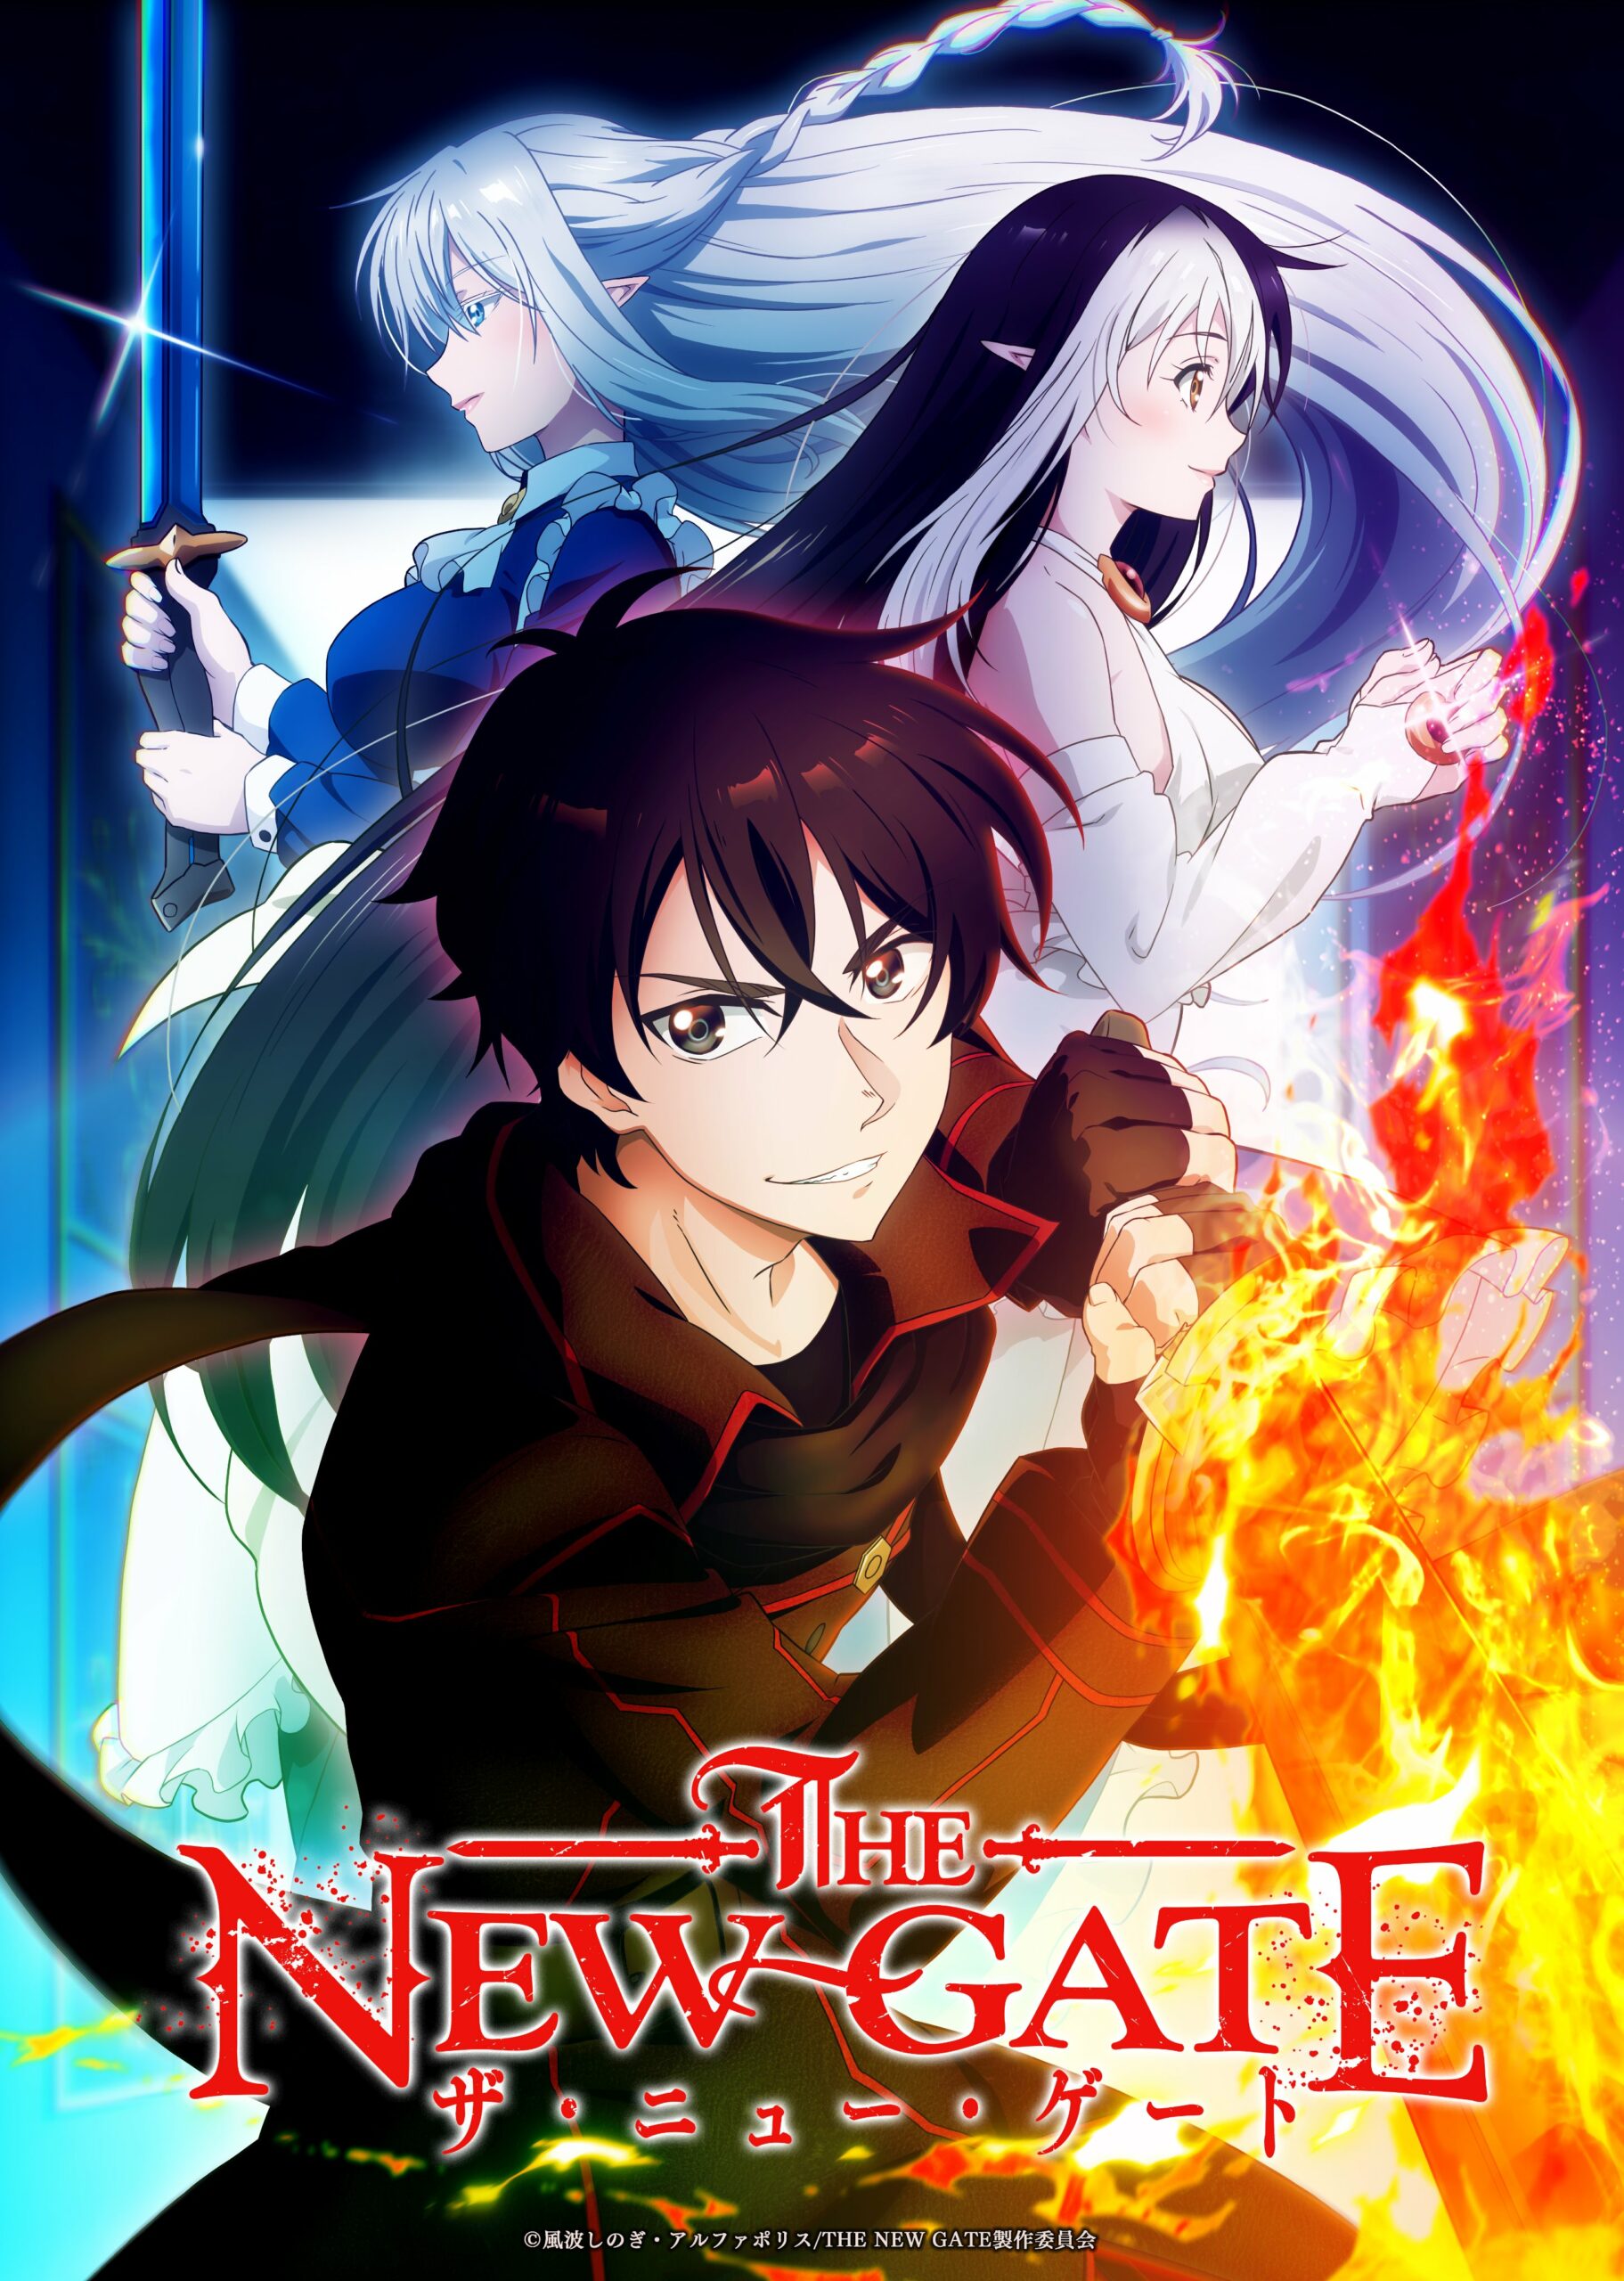 Remarkable GATE Anime Visual Revealed - Haruhichan-demhanvico.com.vn